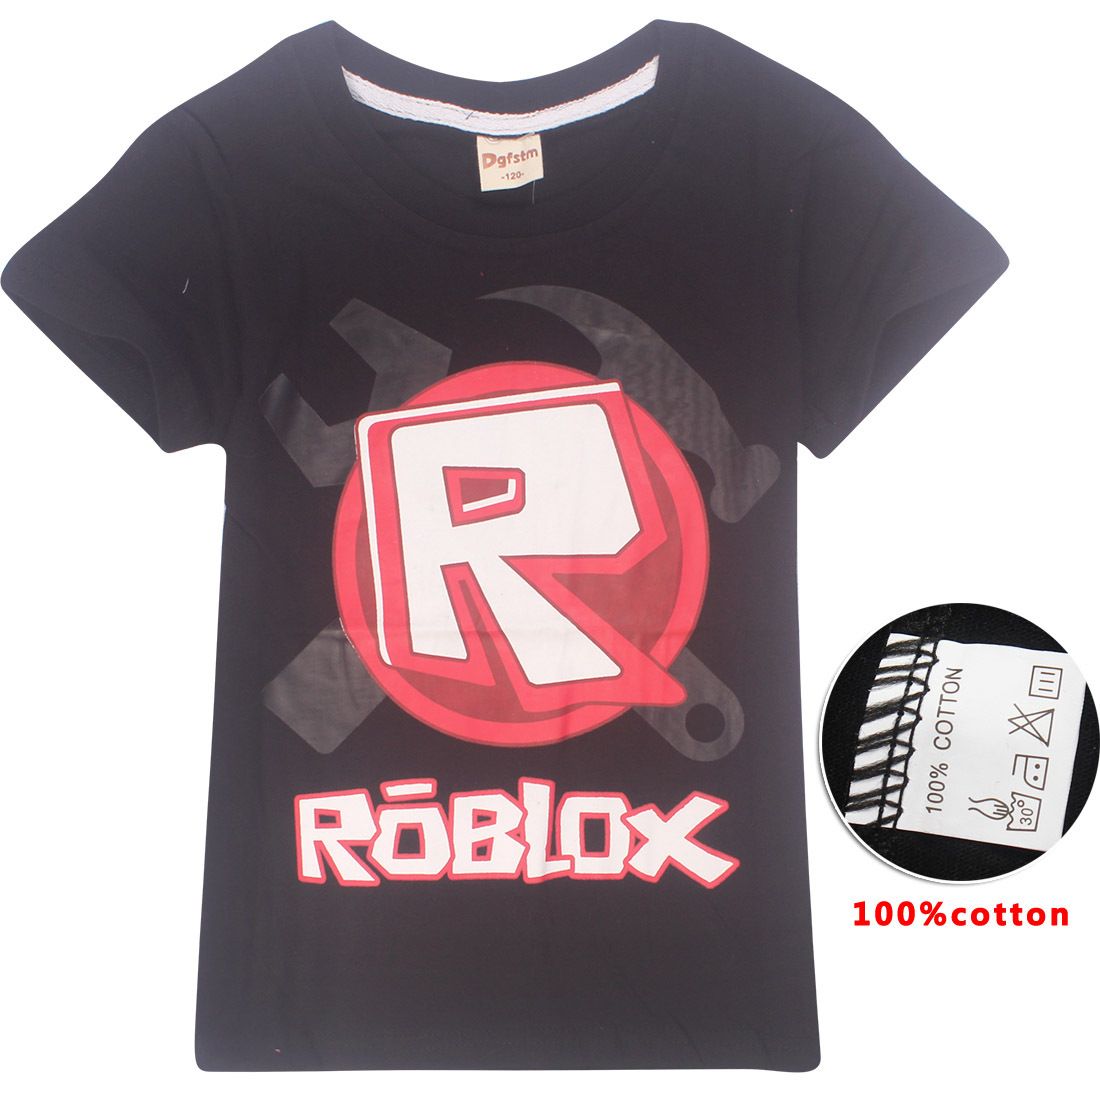 Boy Shirts Roblox Coolmine Community School - roblox kids t shirts roblox character head kids boys girls t shirt tops tees 0 11years